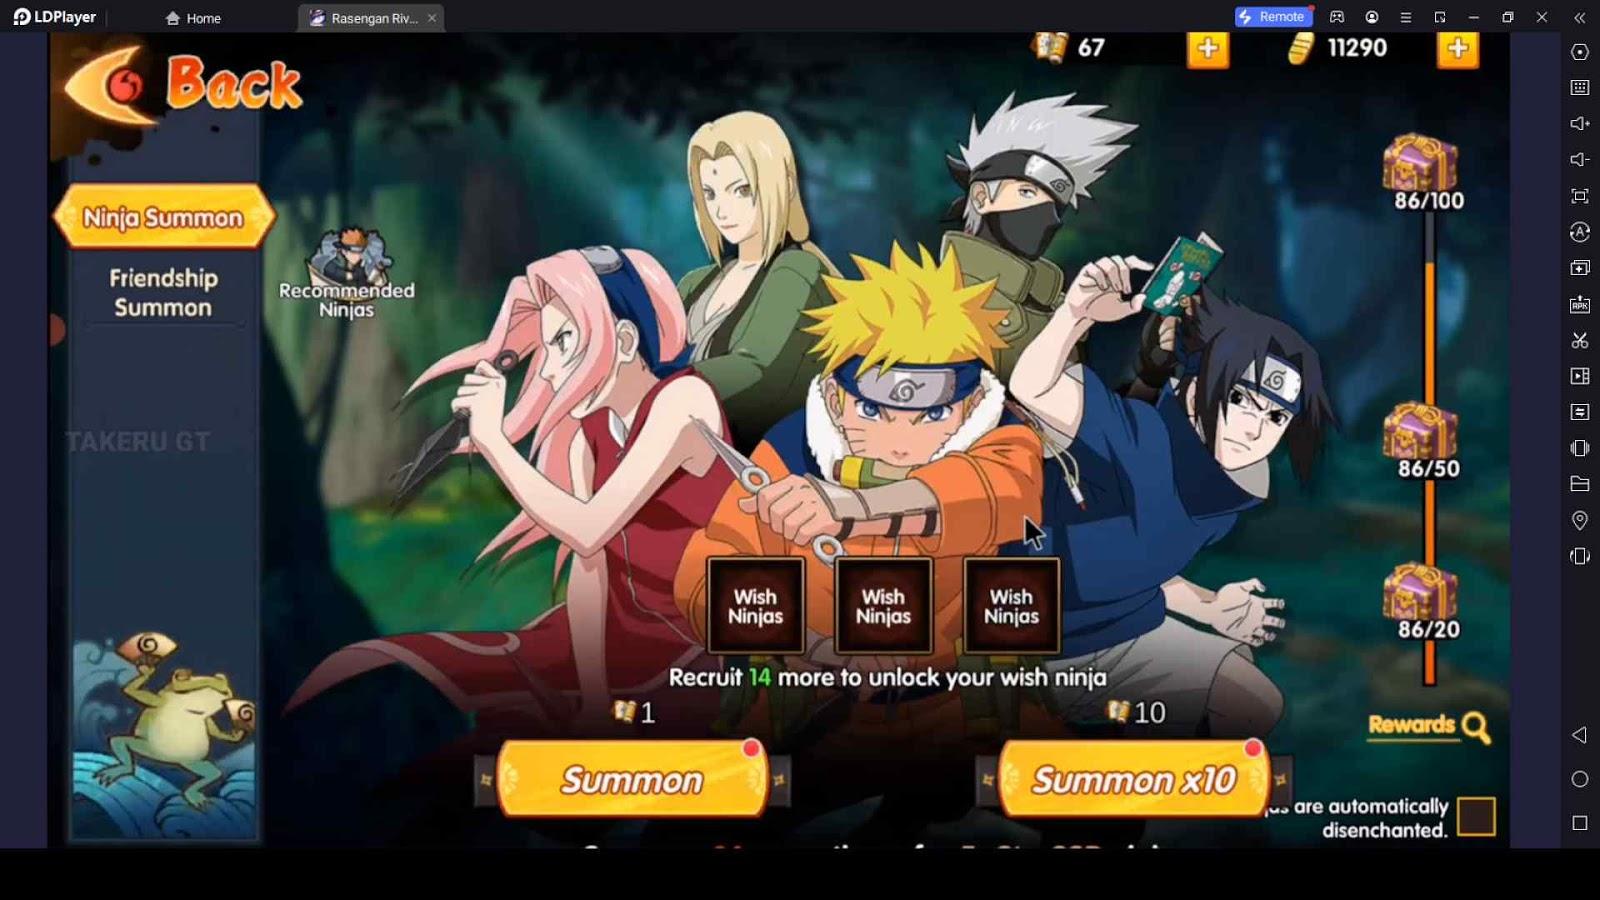 Pro Tips Naruto Shippuden Ultimate Ninja 5 APK + Mod for Android.